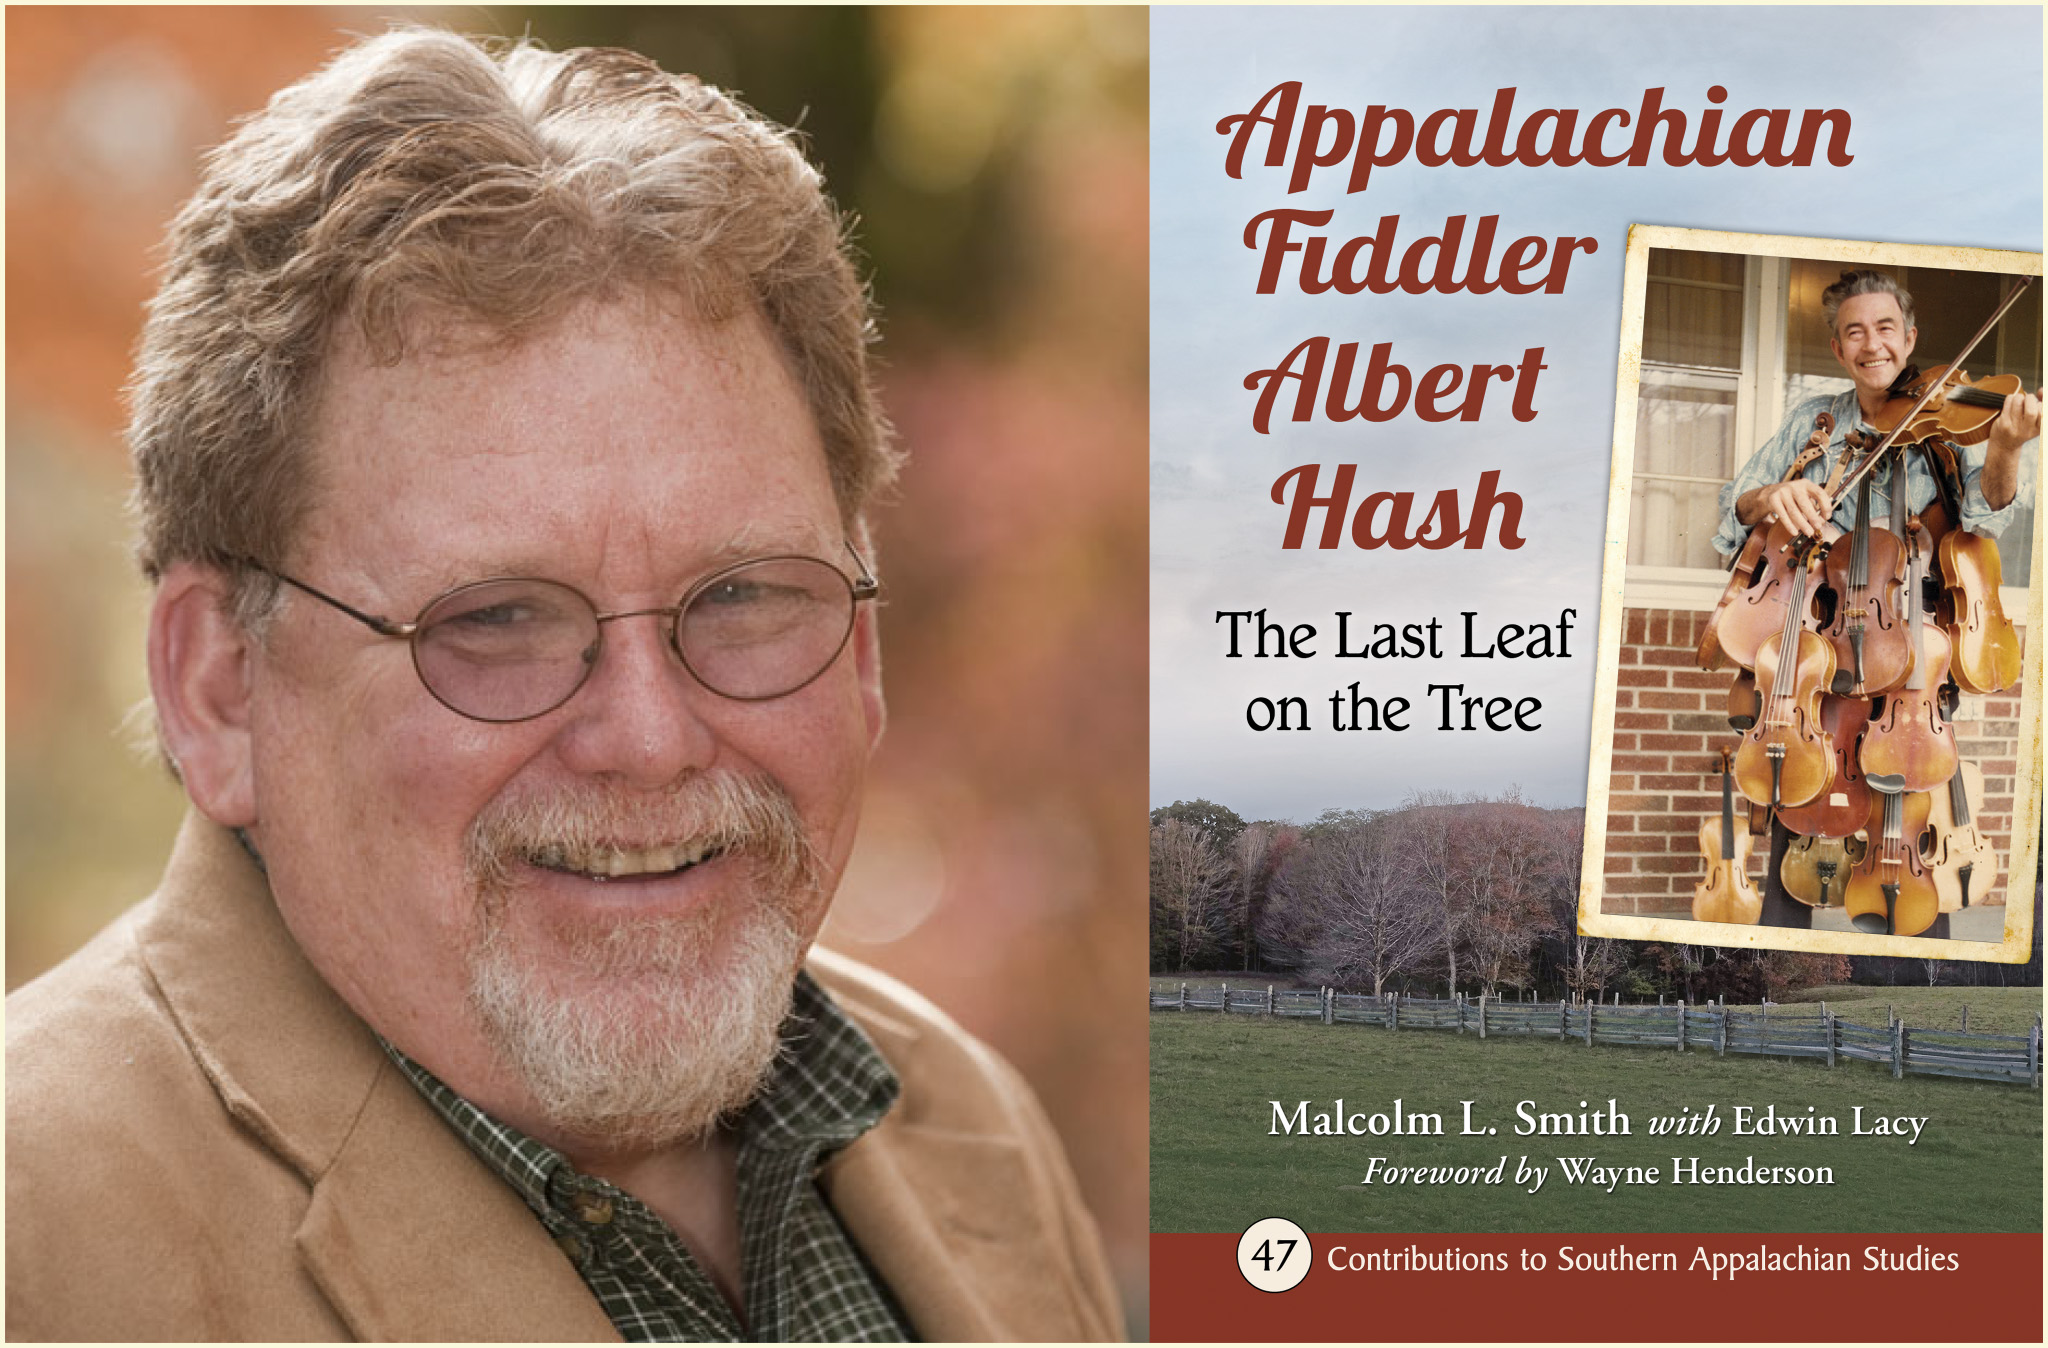 Dr. Malcolm Smith on “Appalachian Fiddler Albert Hash” Aug. 9